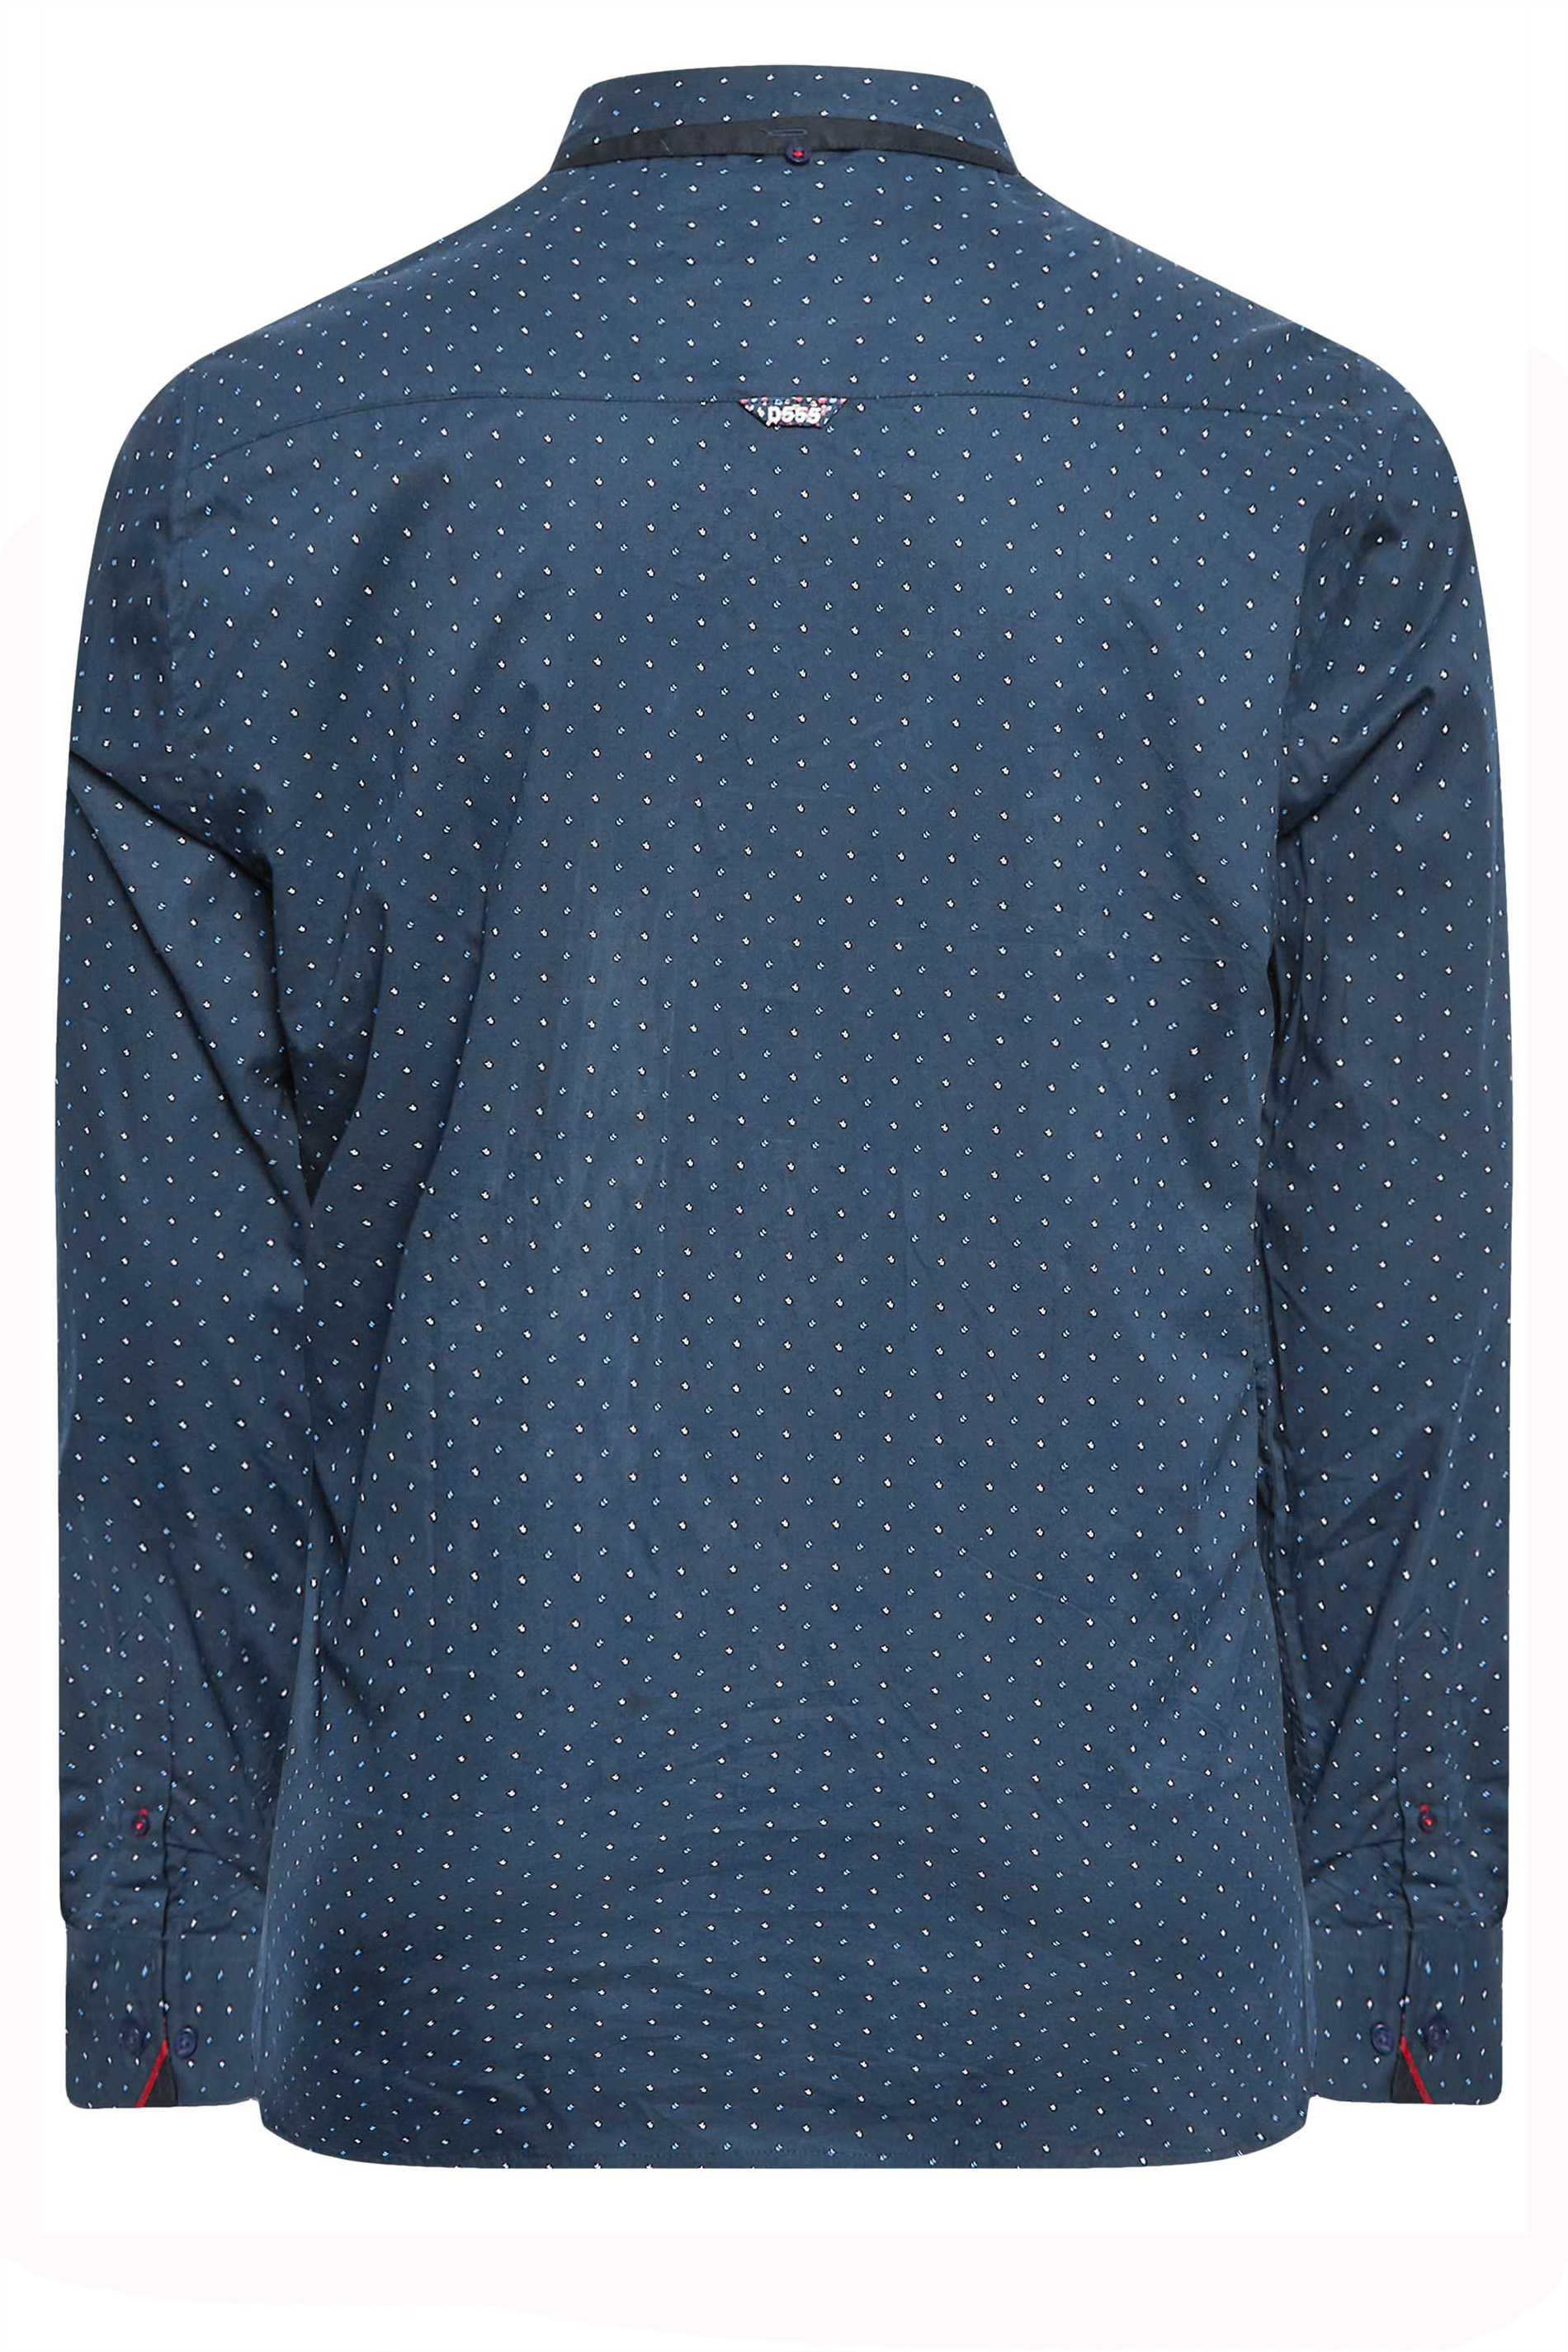 D555 Big & Tall Dark Blue Dot Print Shirt | BadRhino  2